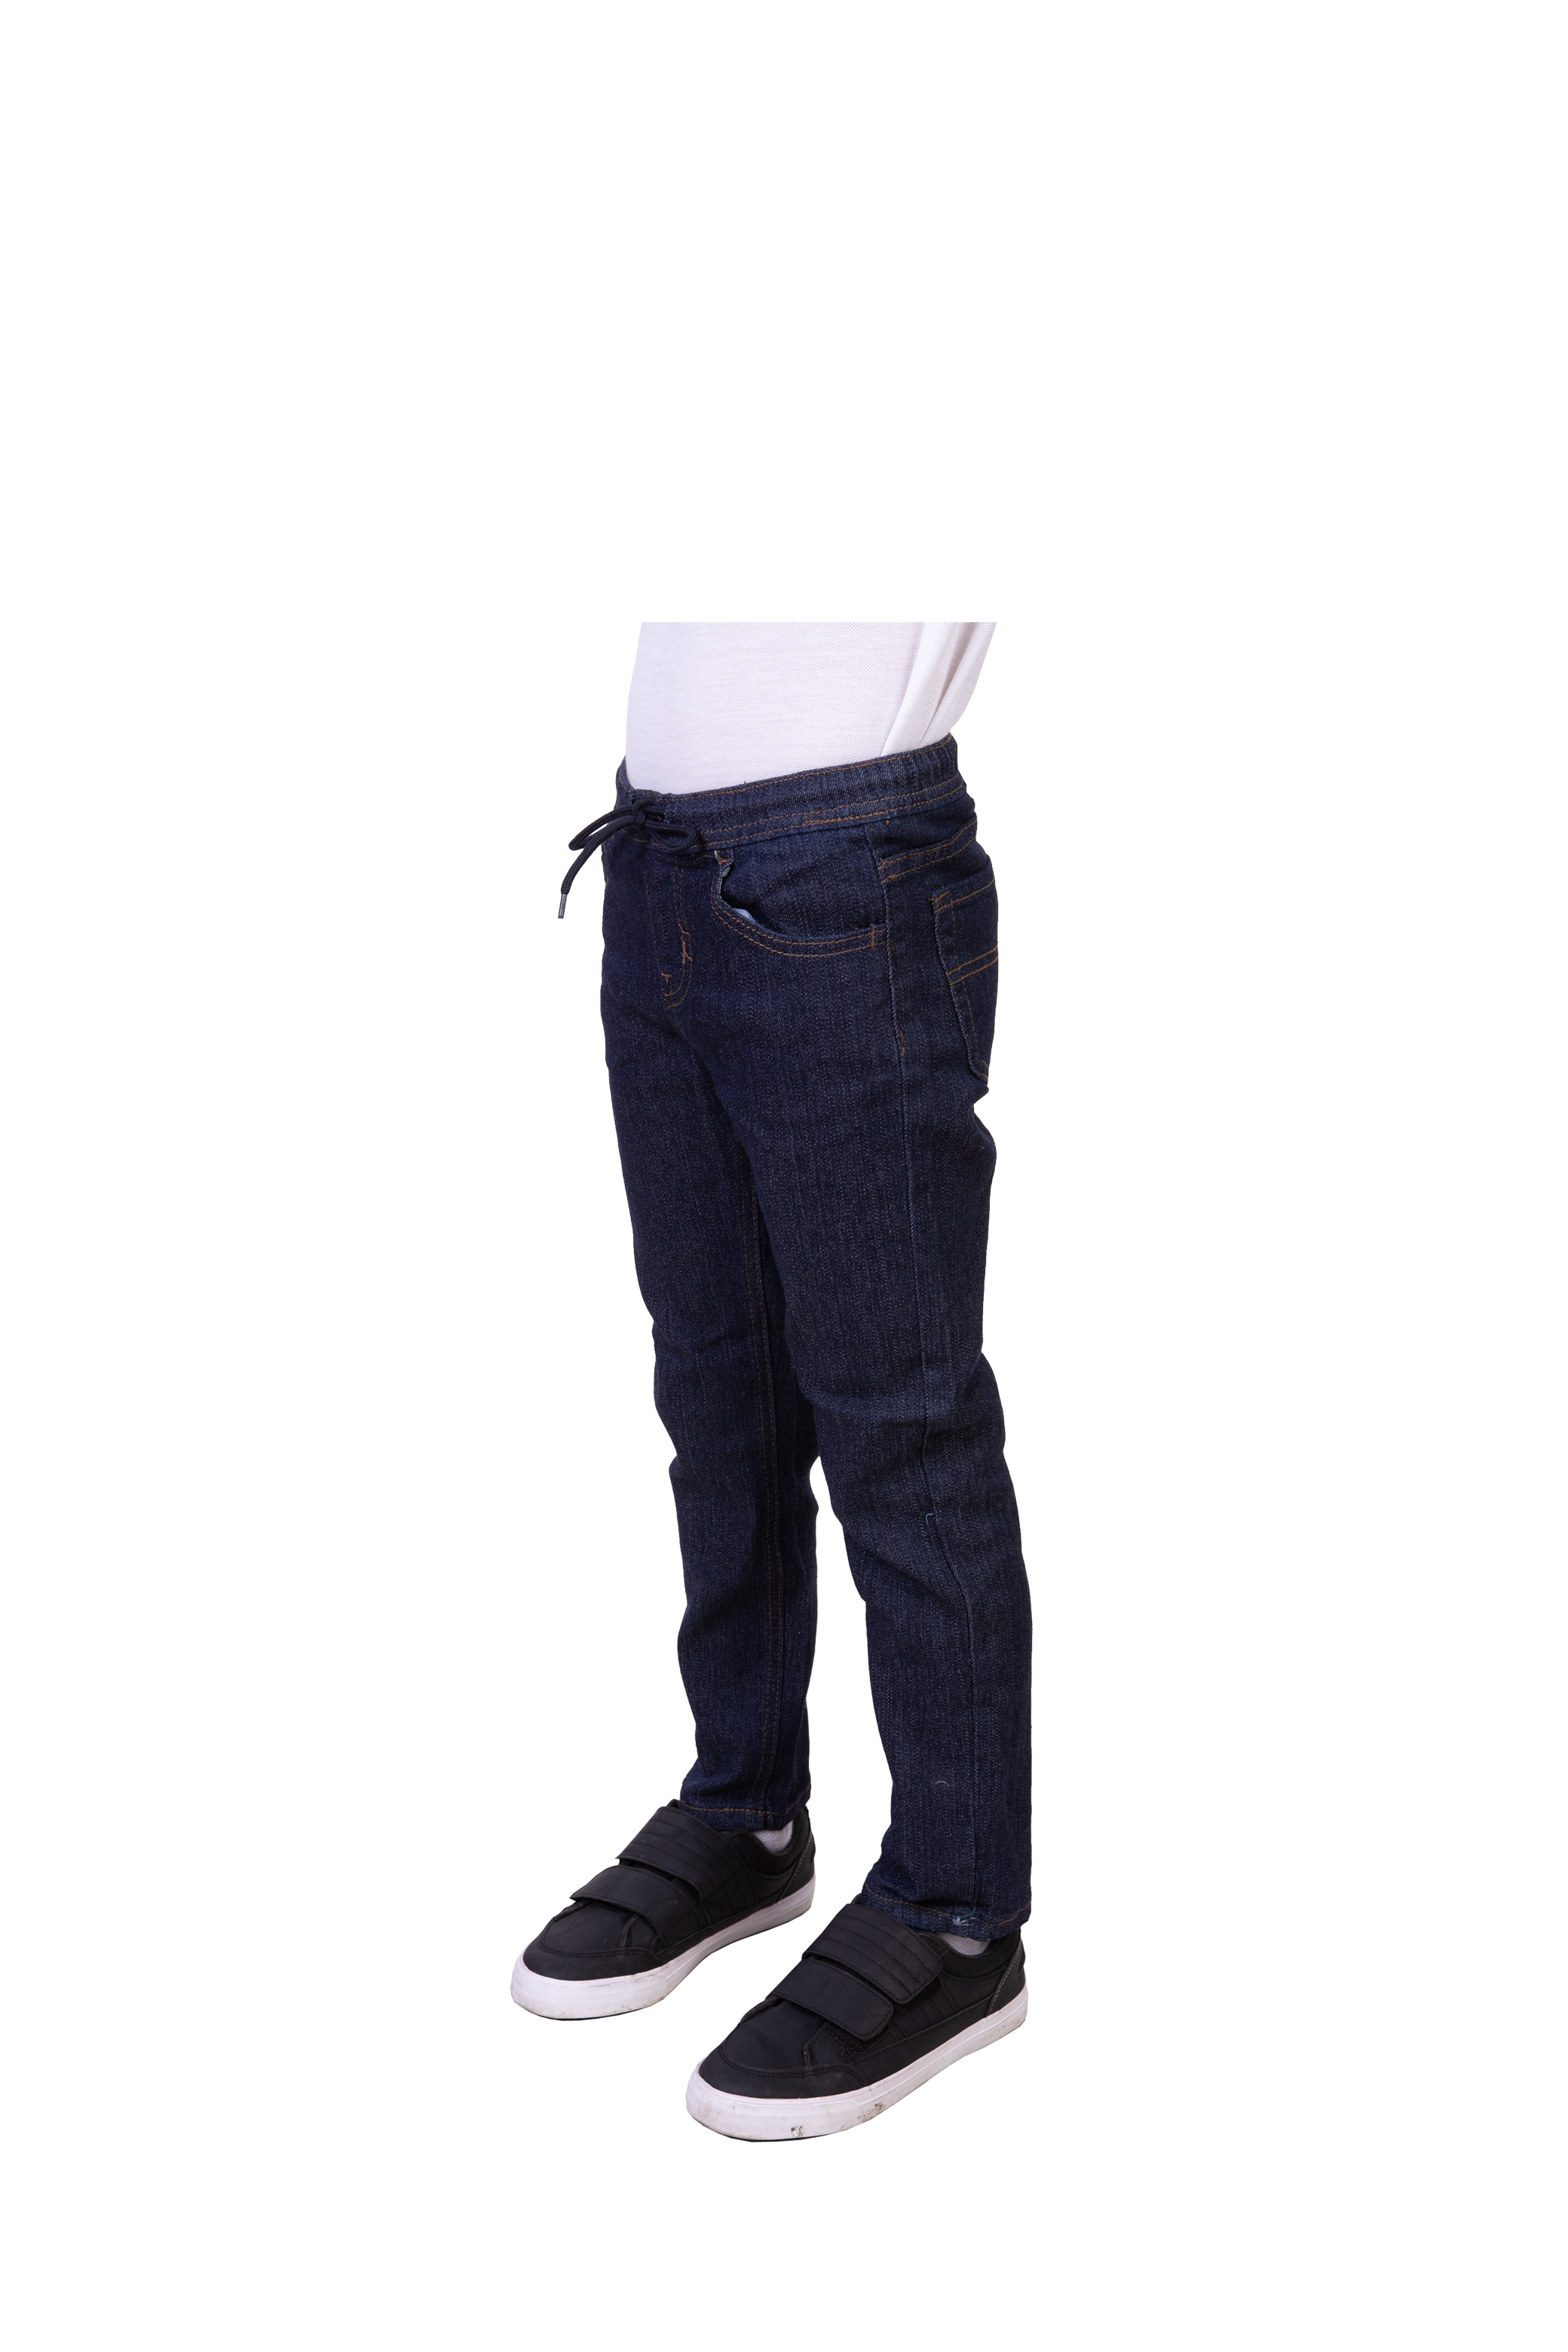 boys skinny jeans size 16